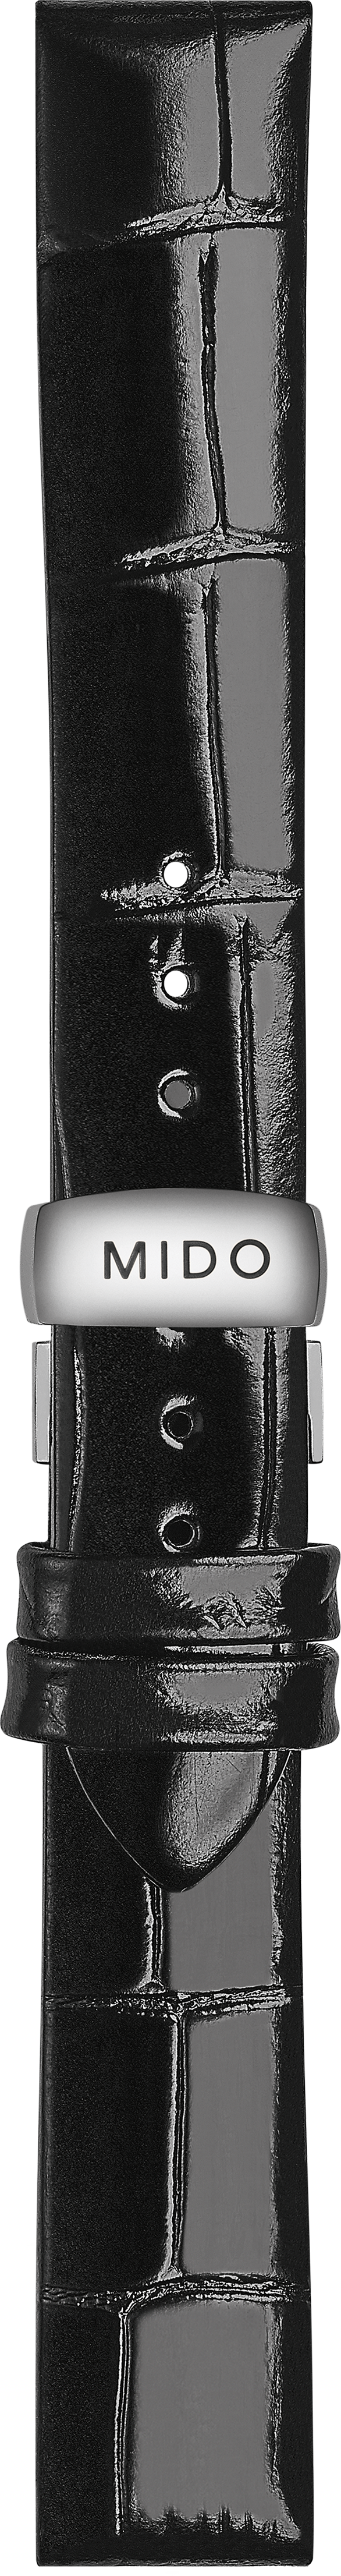 Mido Rainflower black cowhide leather strap